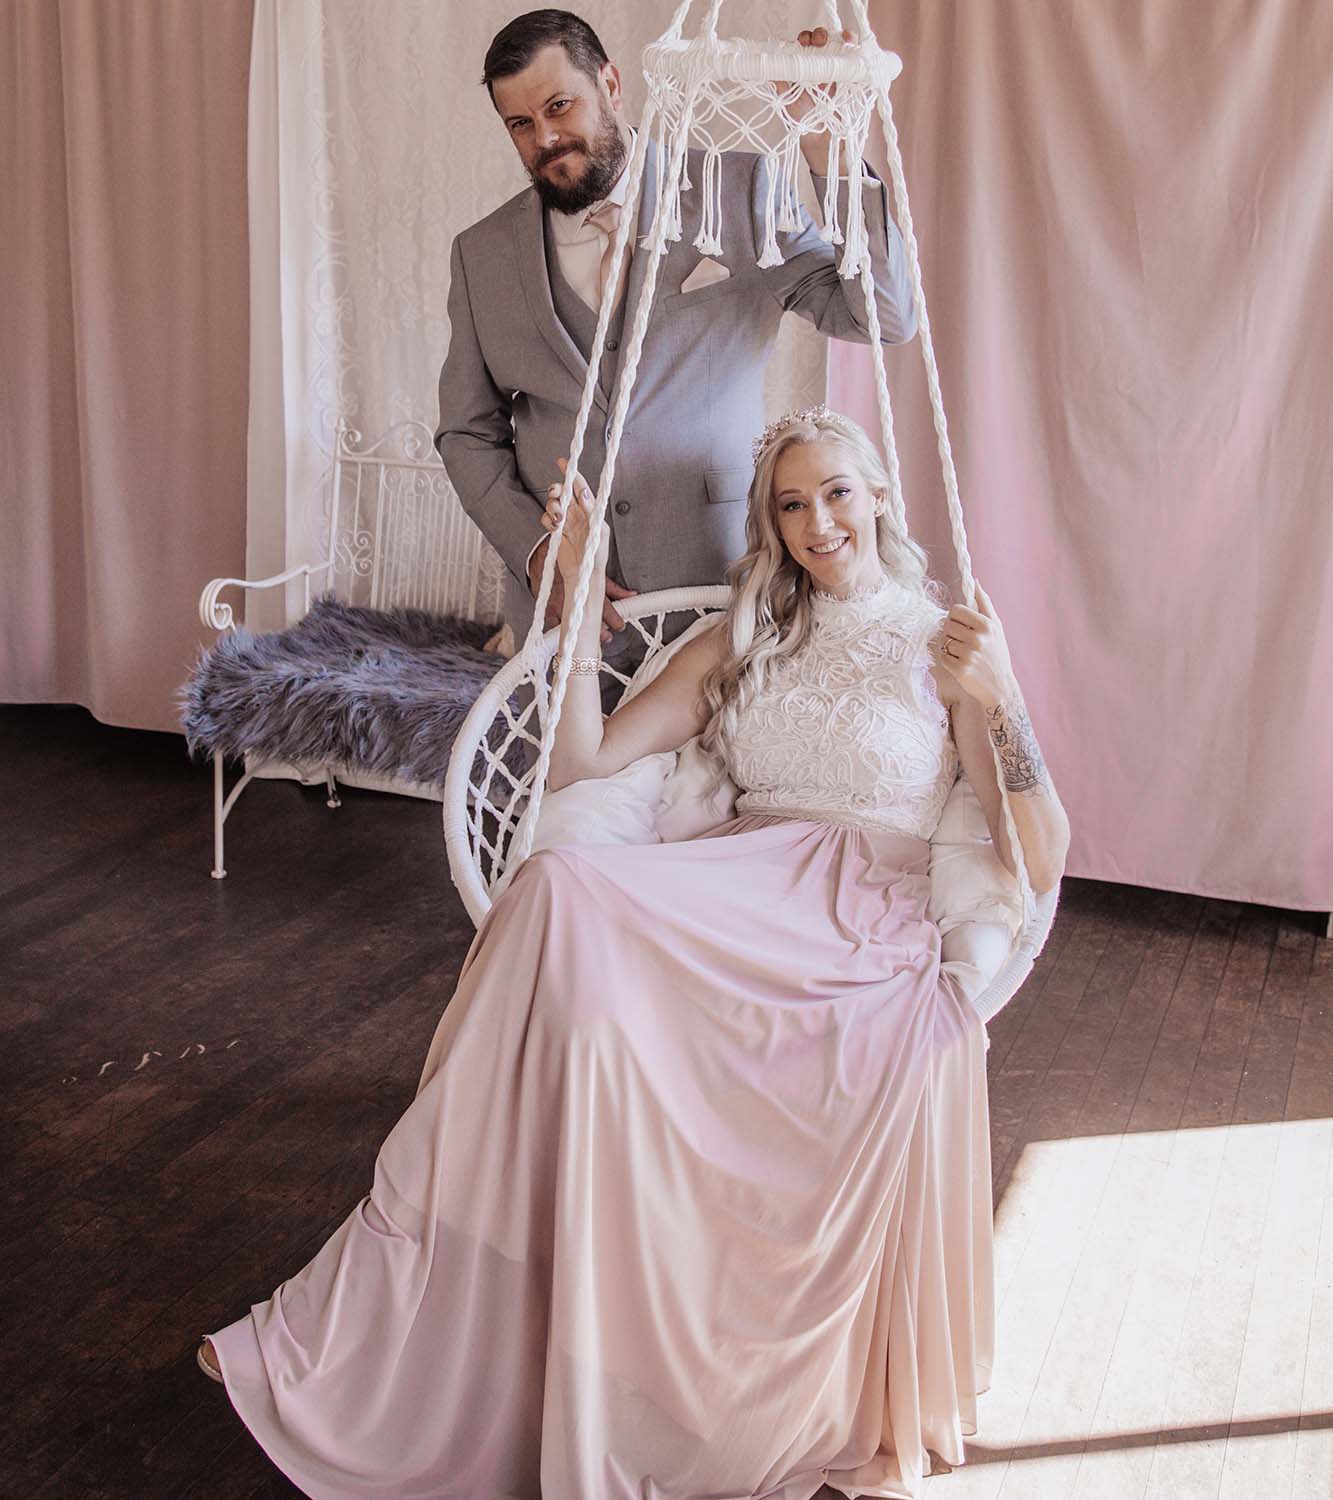 Wedding Photography - Bride and groom on swing